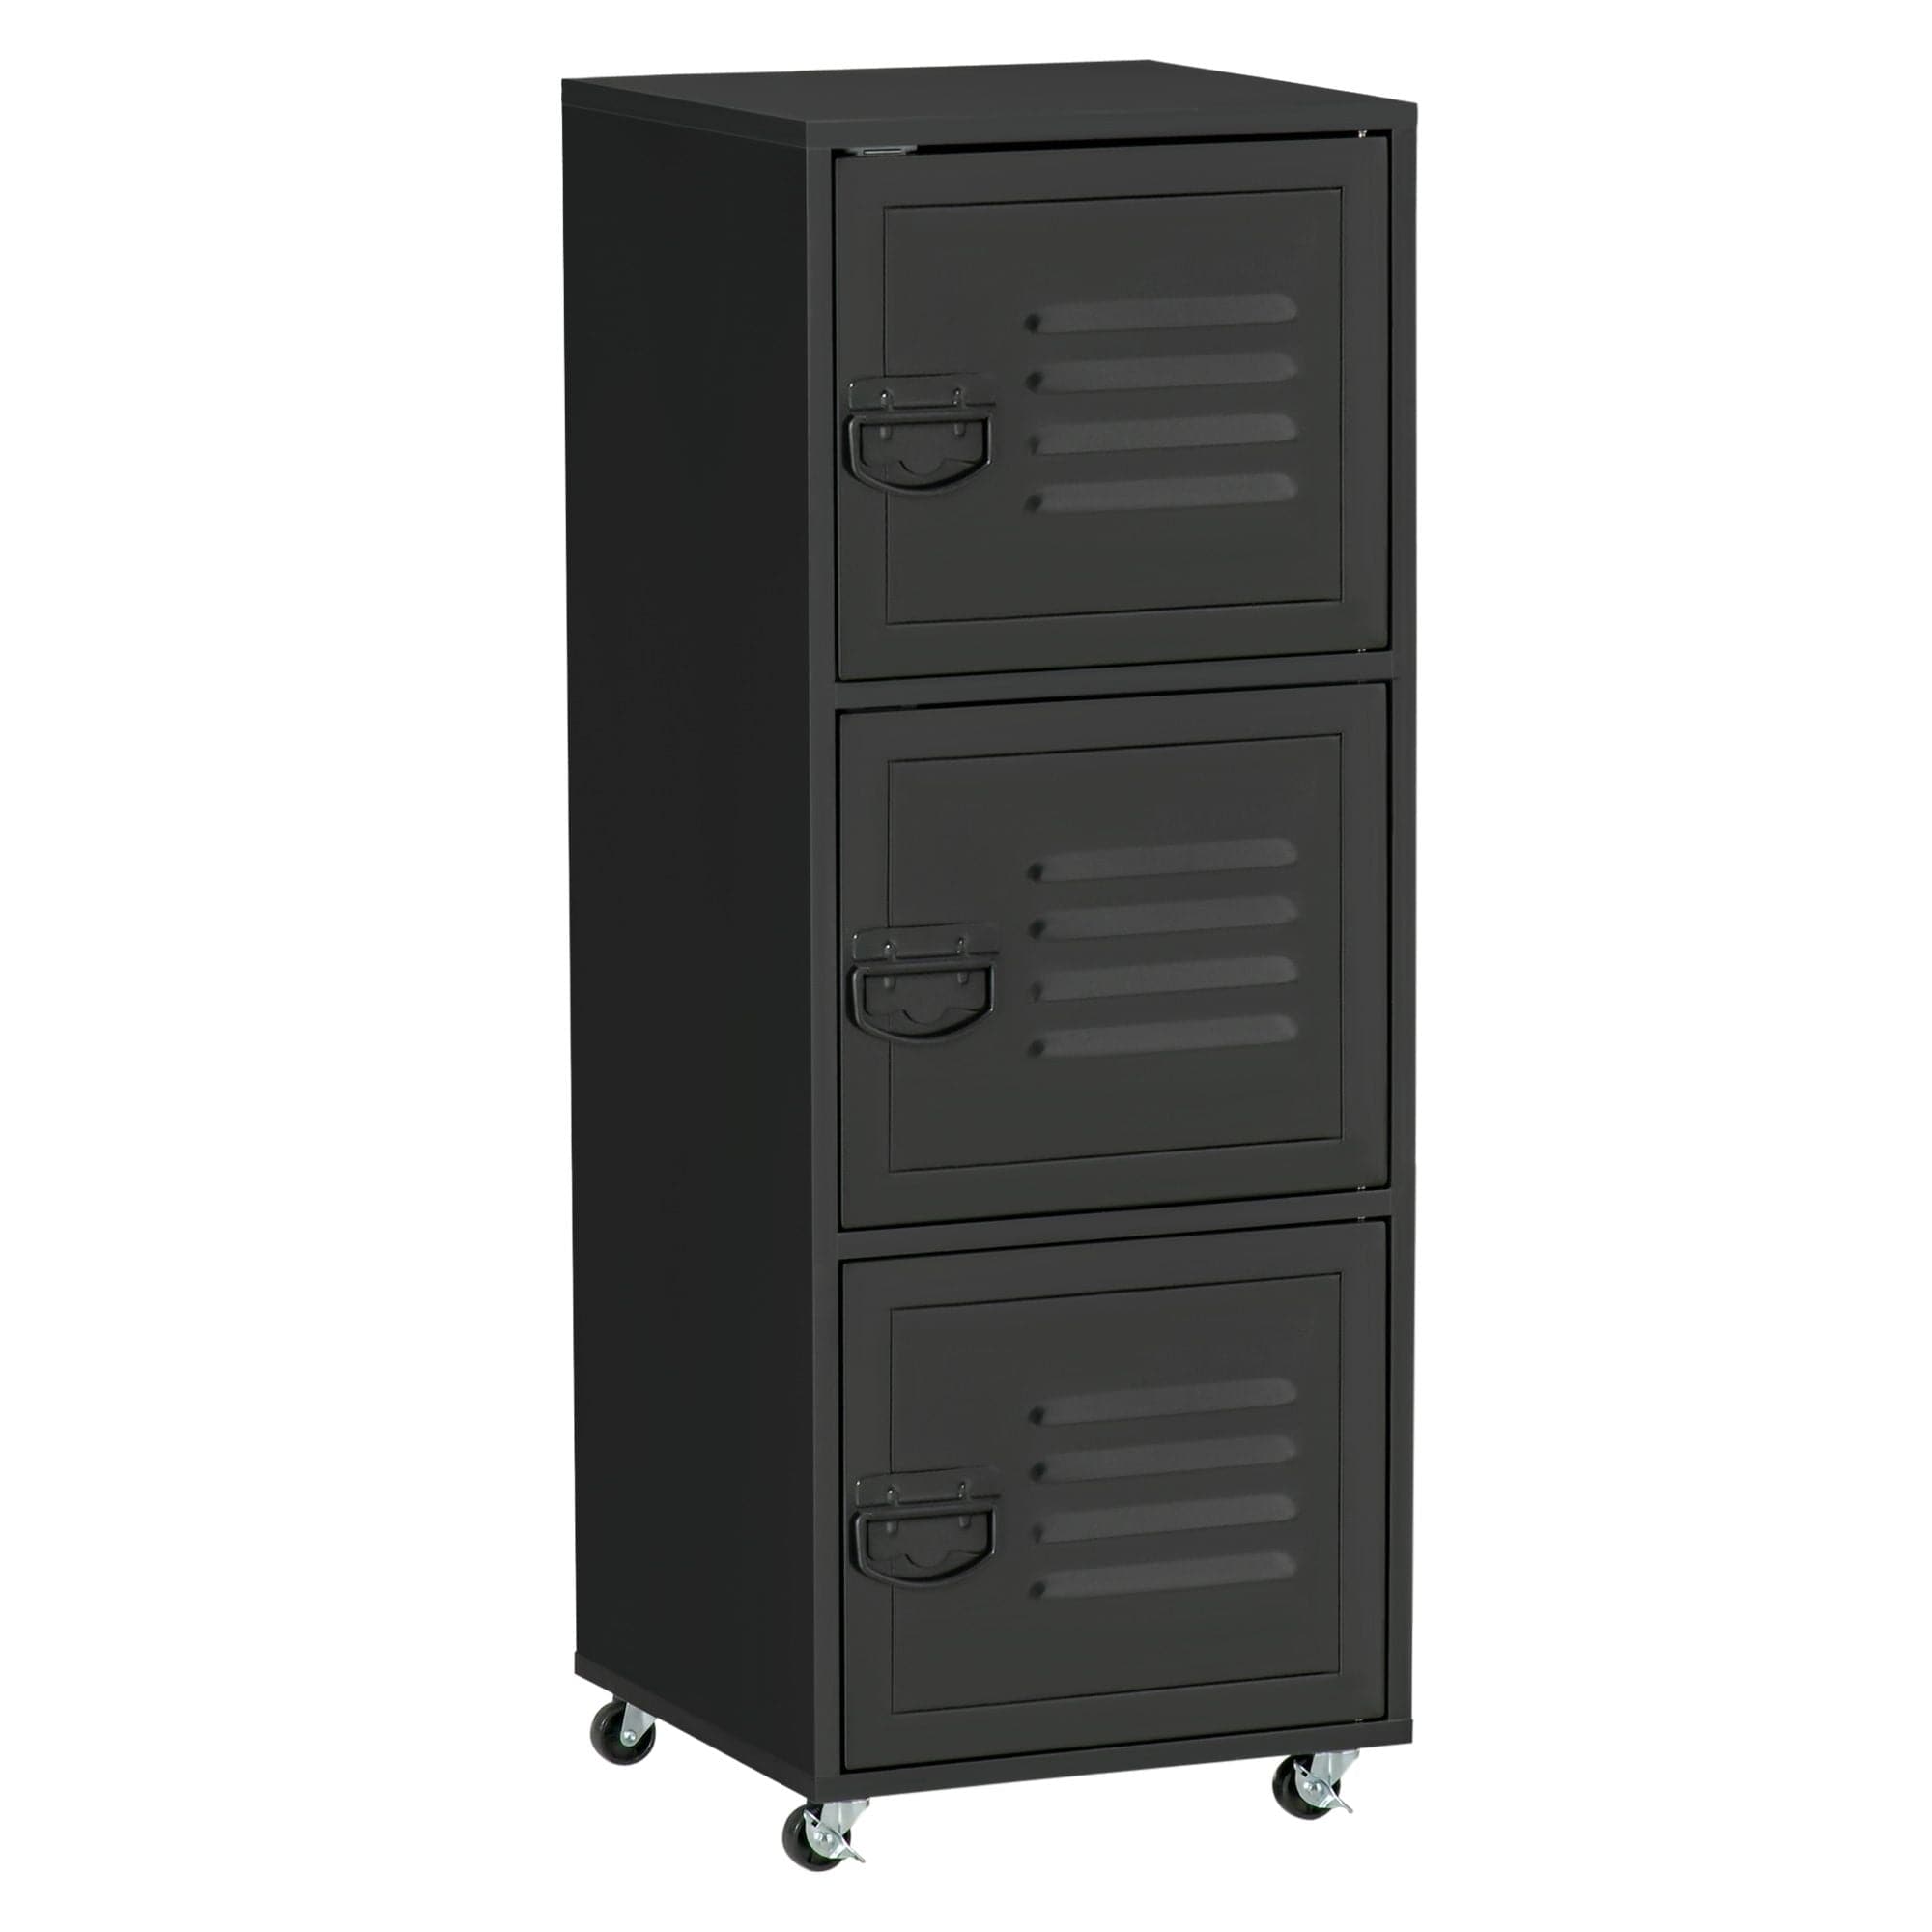 ProperAV Extra Mobile 3-Tier Storage Filing Cabinet with Wheels & Metal Doors - Black